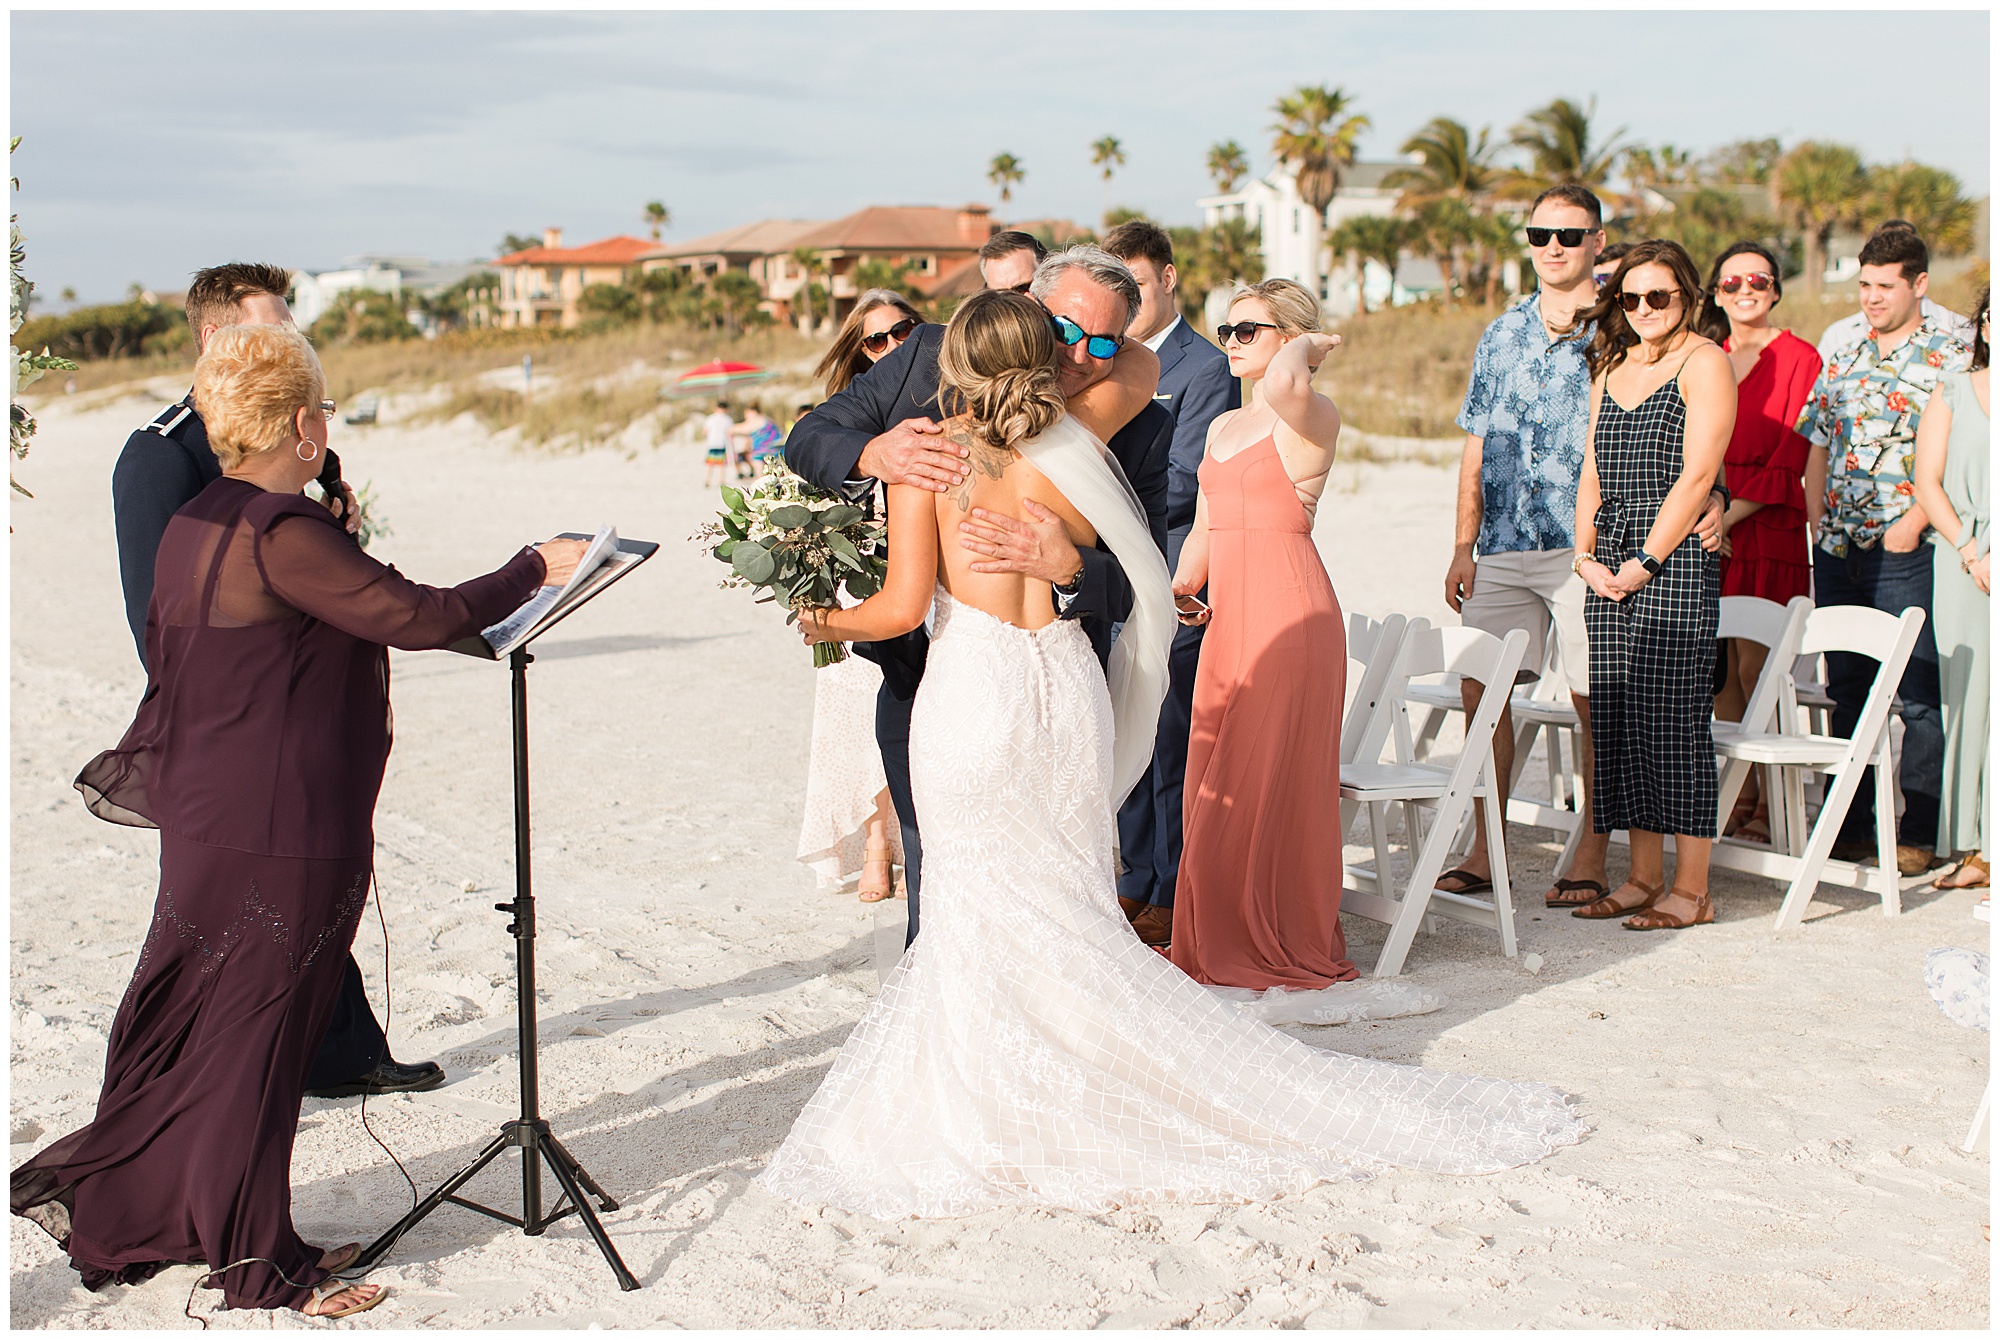 Jace & Anton, Pass-A-Grille Beach, St. Petersburg Florida wedding, Kelley Stinson Photography, beach wedding, beach ceremony